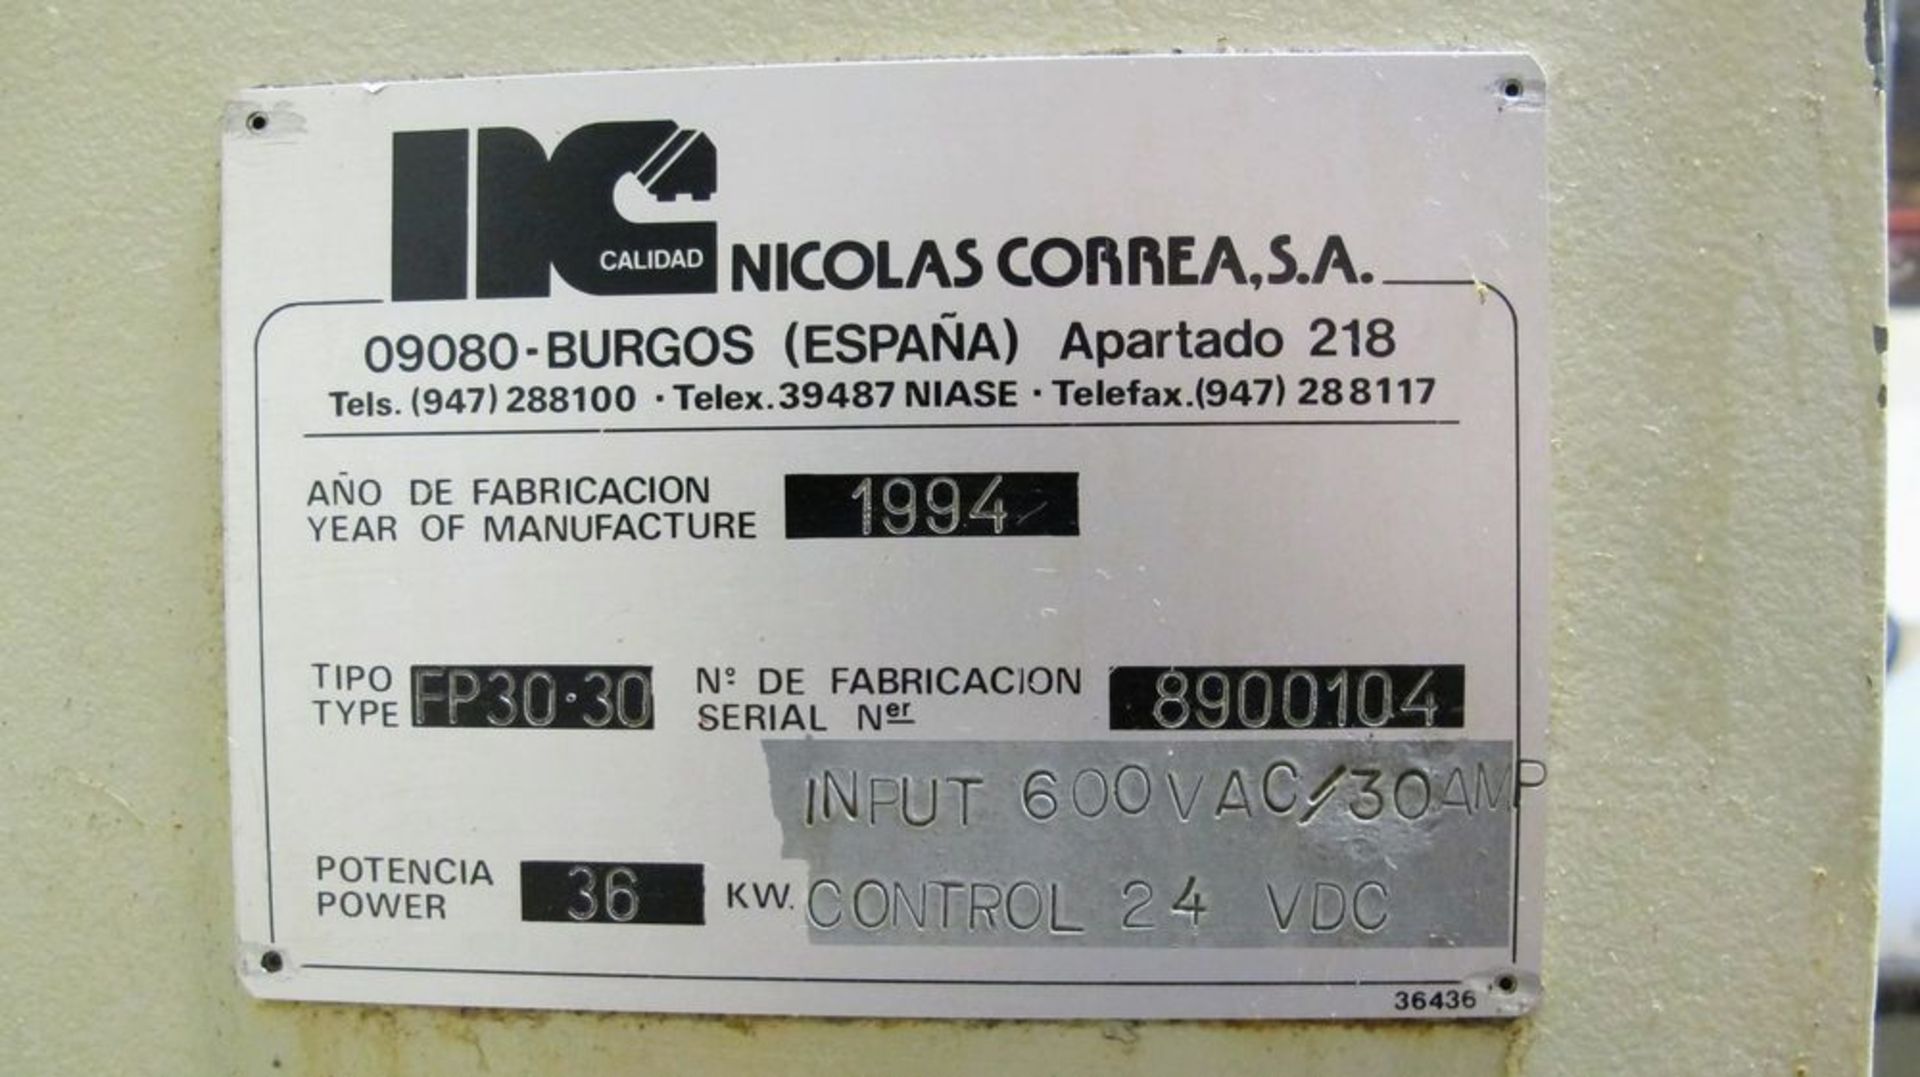 NICOLAS CORREA FP-30/30 CNC Bridge Type Vertical Machining Center, s/n 8900104, 49” x 120” Table ( - Image 13 of 13